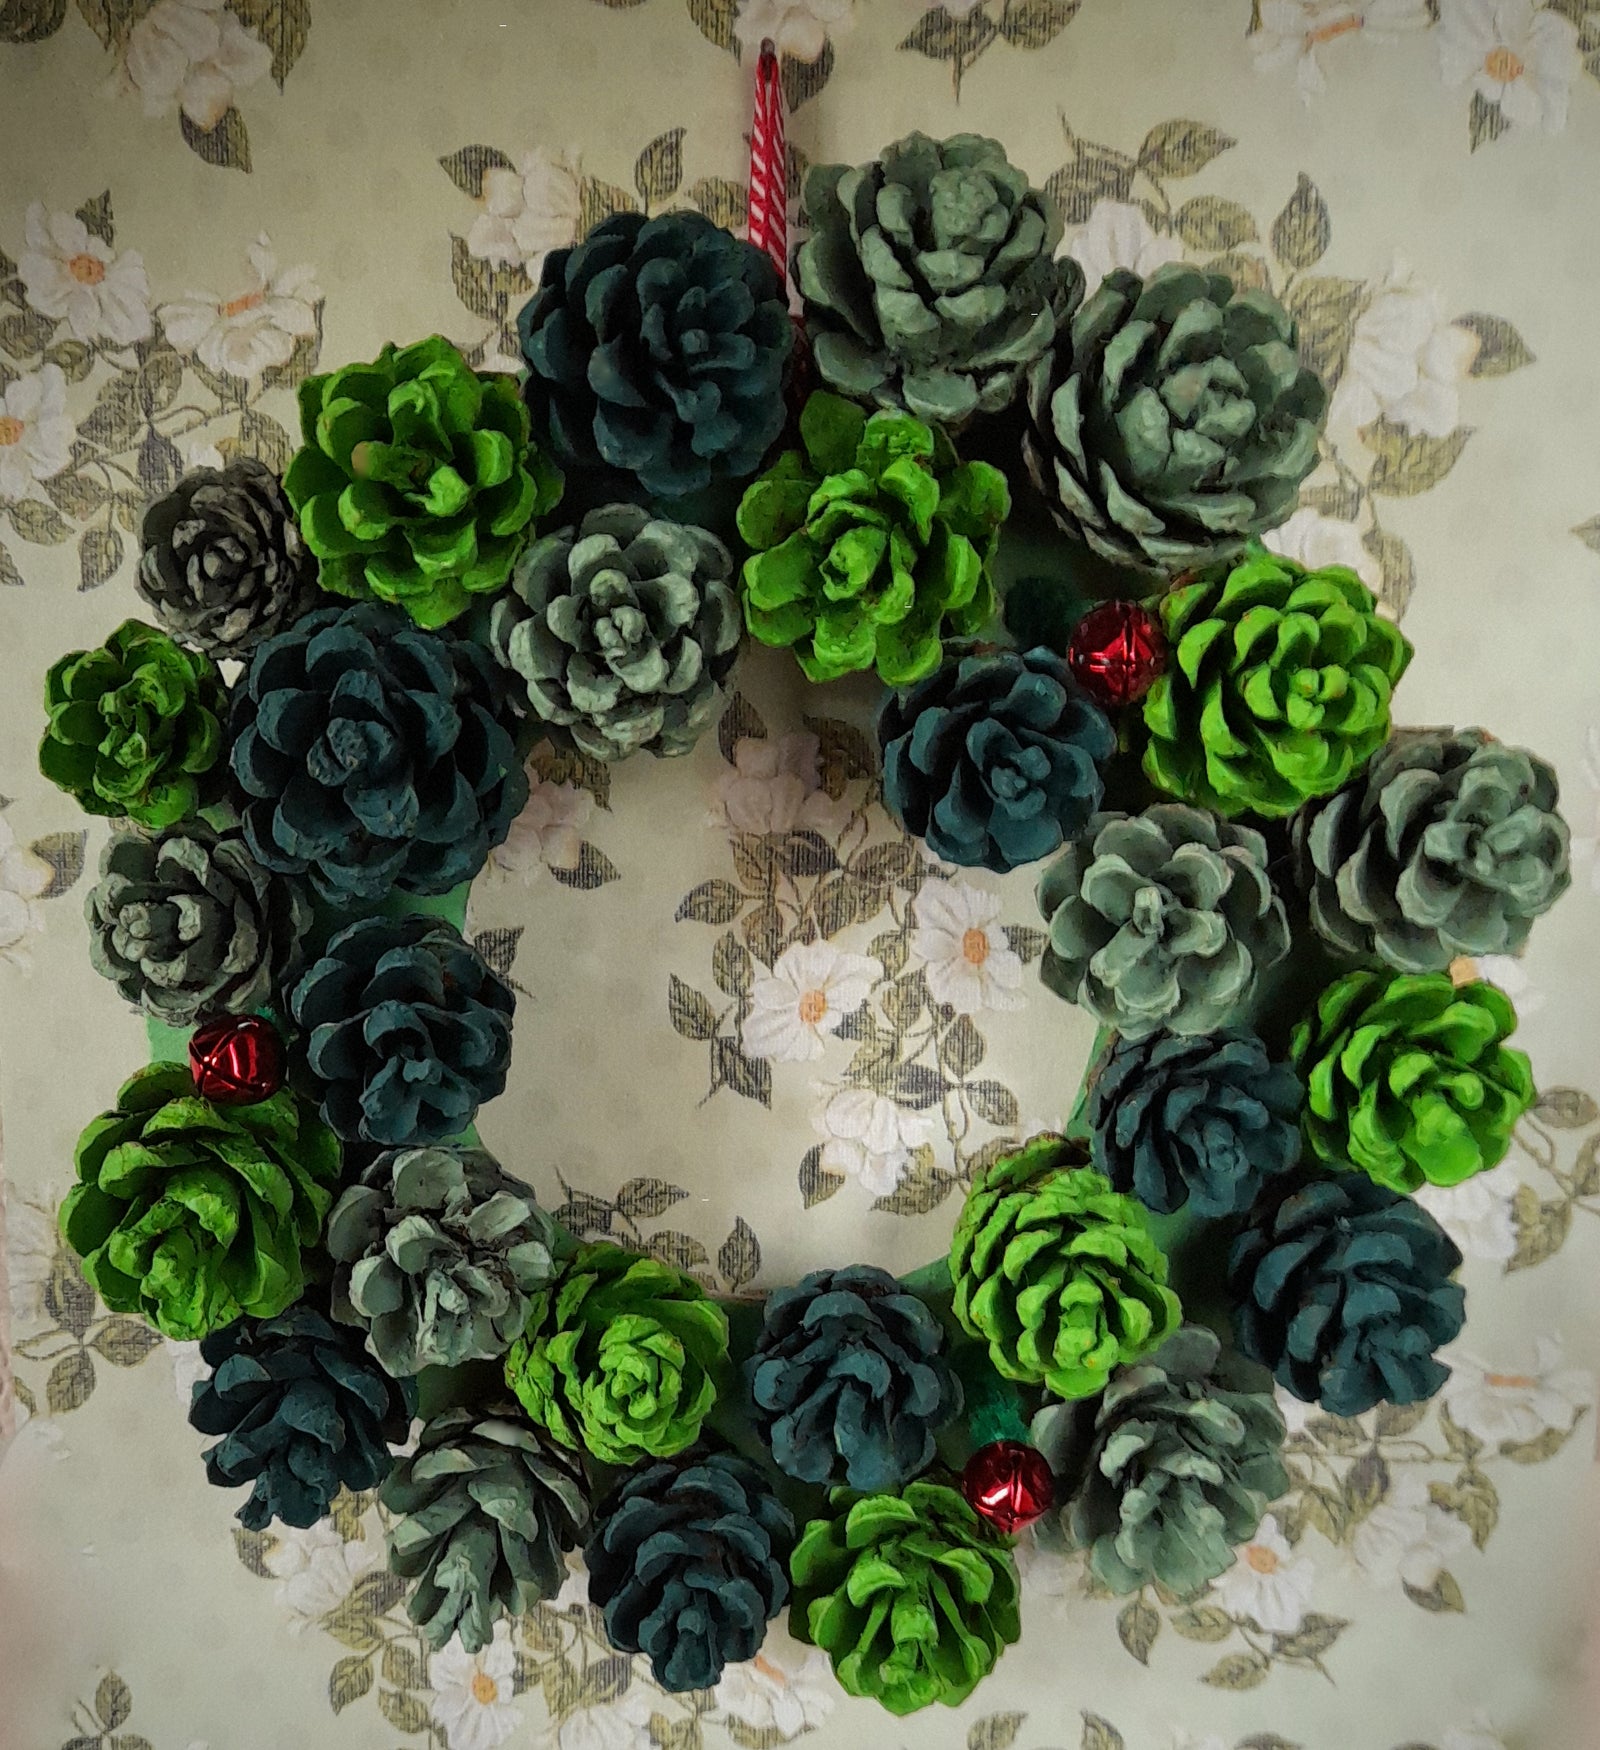 How to Make a Winter Wonderland Wreath